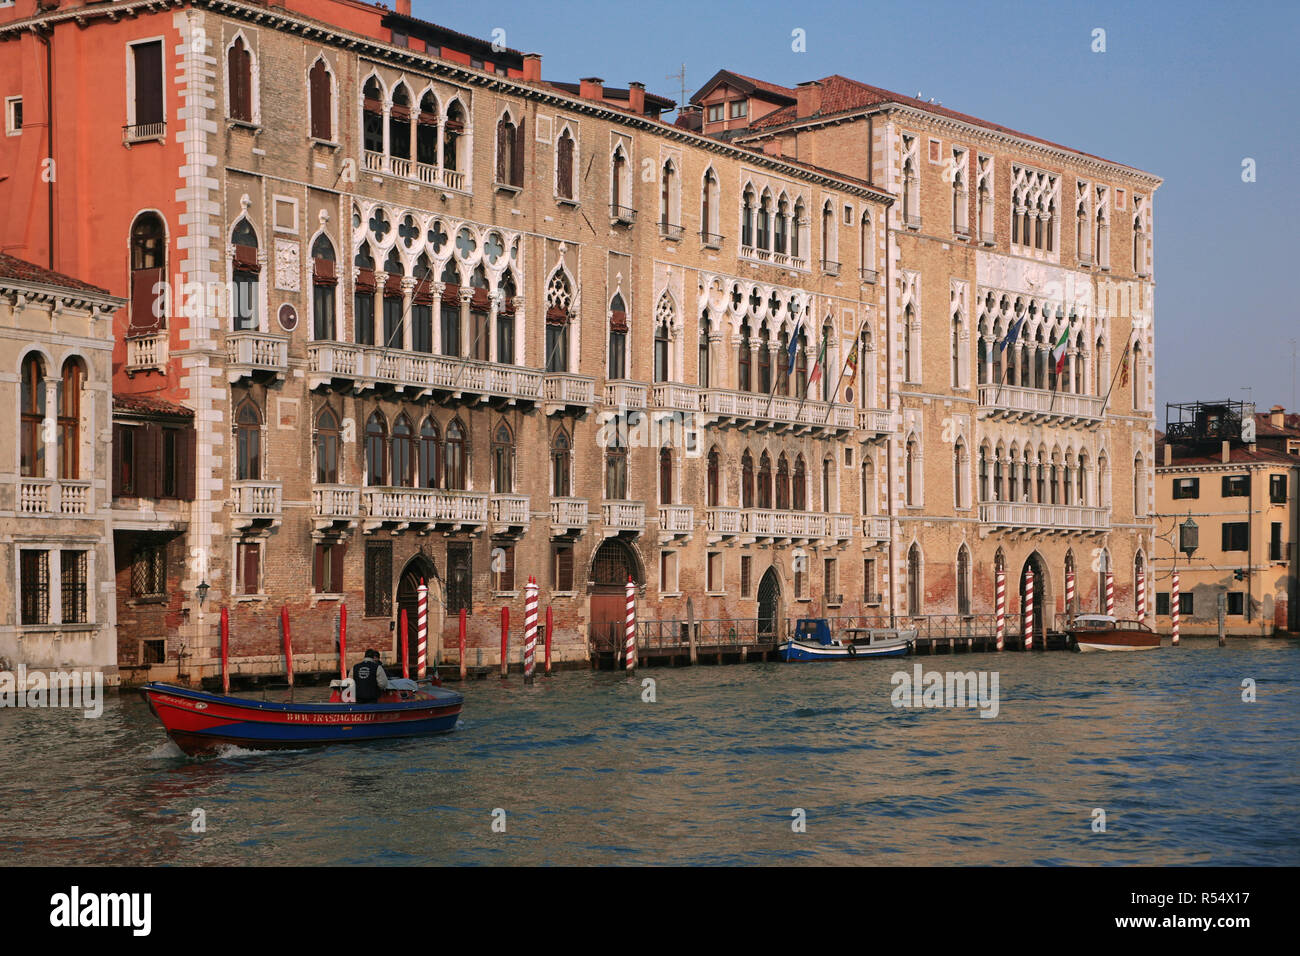 Le Grand Canal, Venise, Italie : Palazzo Giustinian et Ca' Foscari à Dorsoduro Banque D'Images